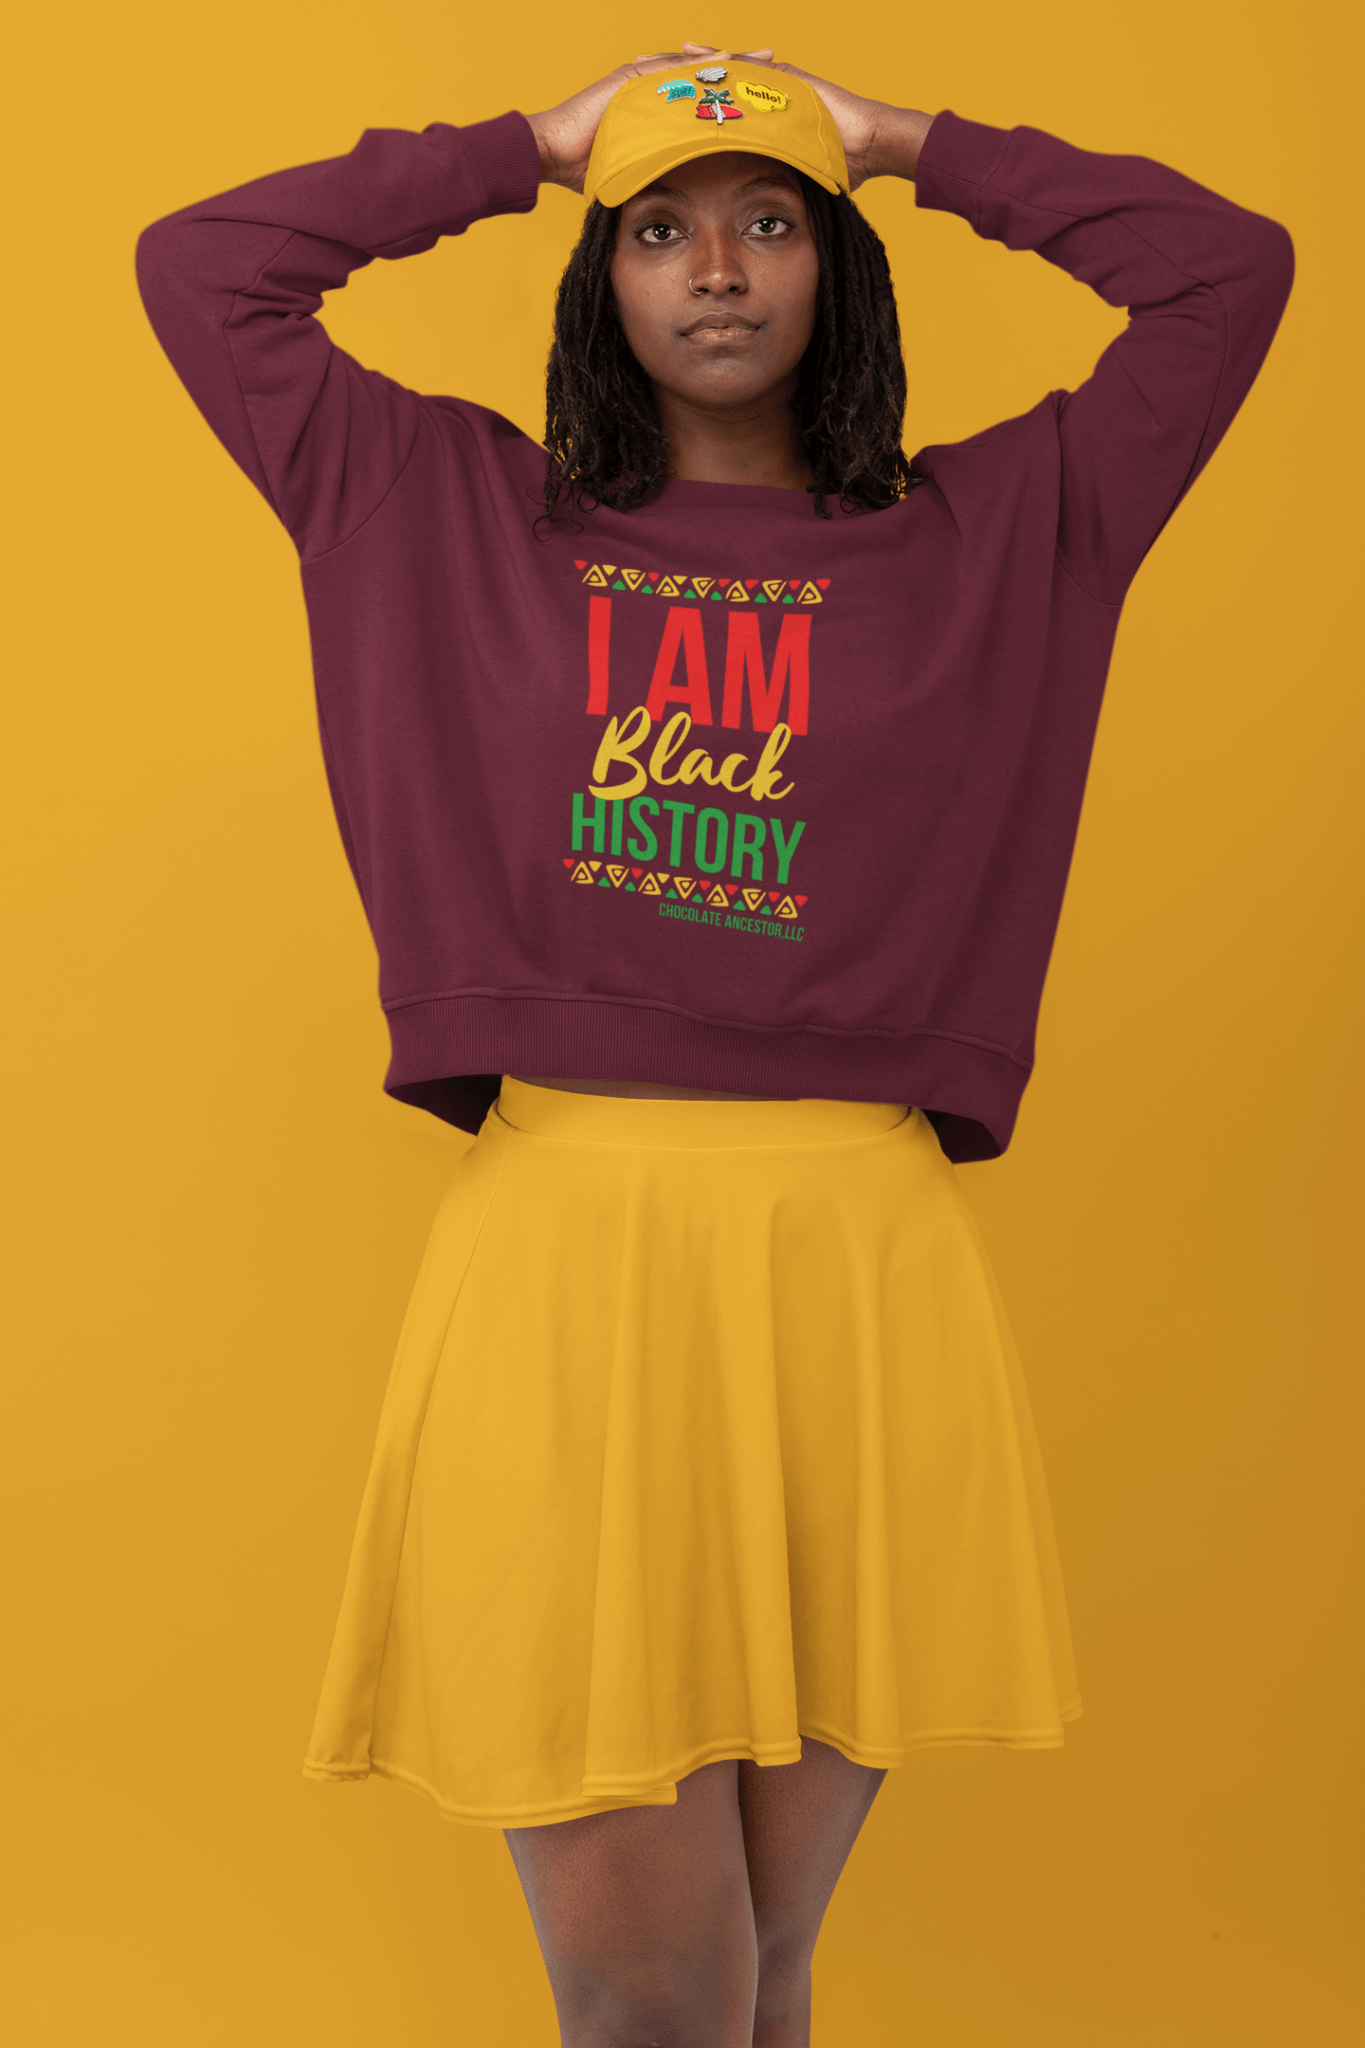 I Am Black History Unisex Sweatshirt - Chocolate Ancestor